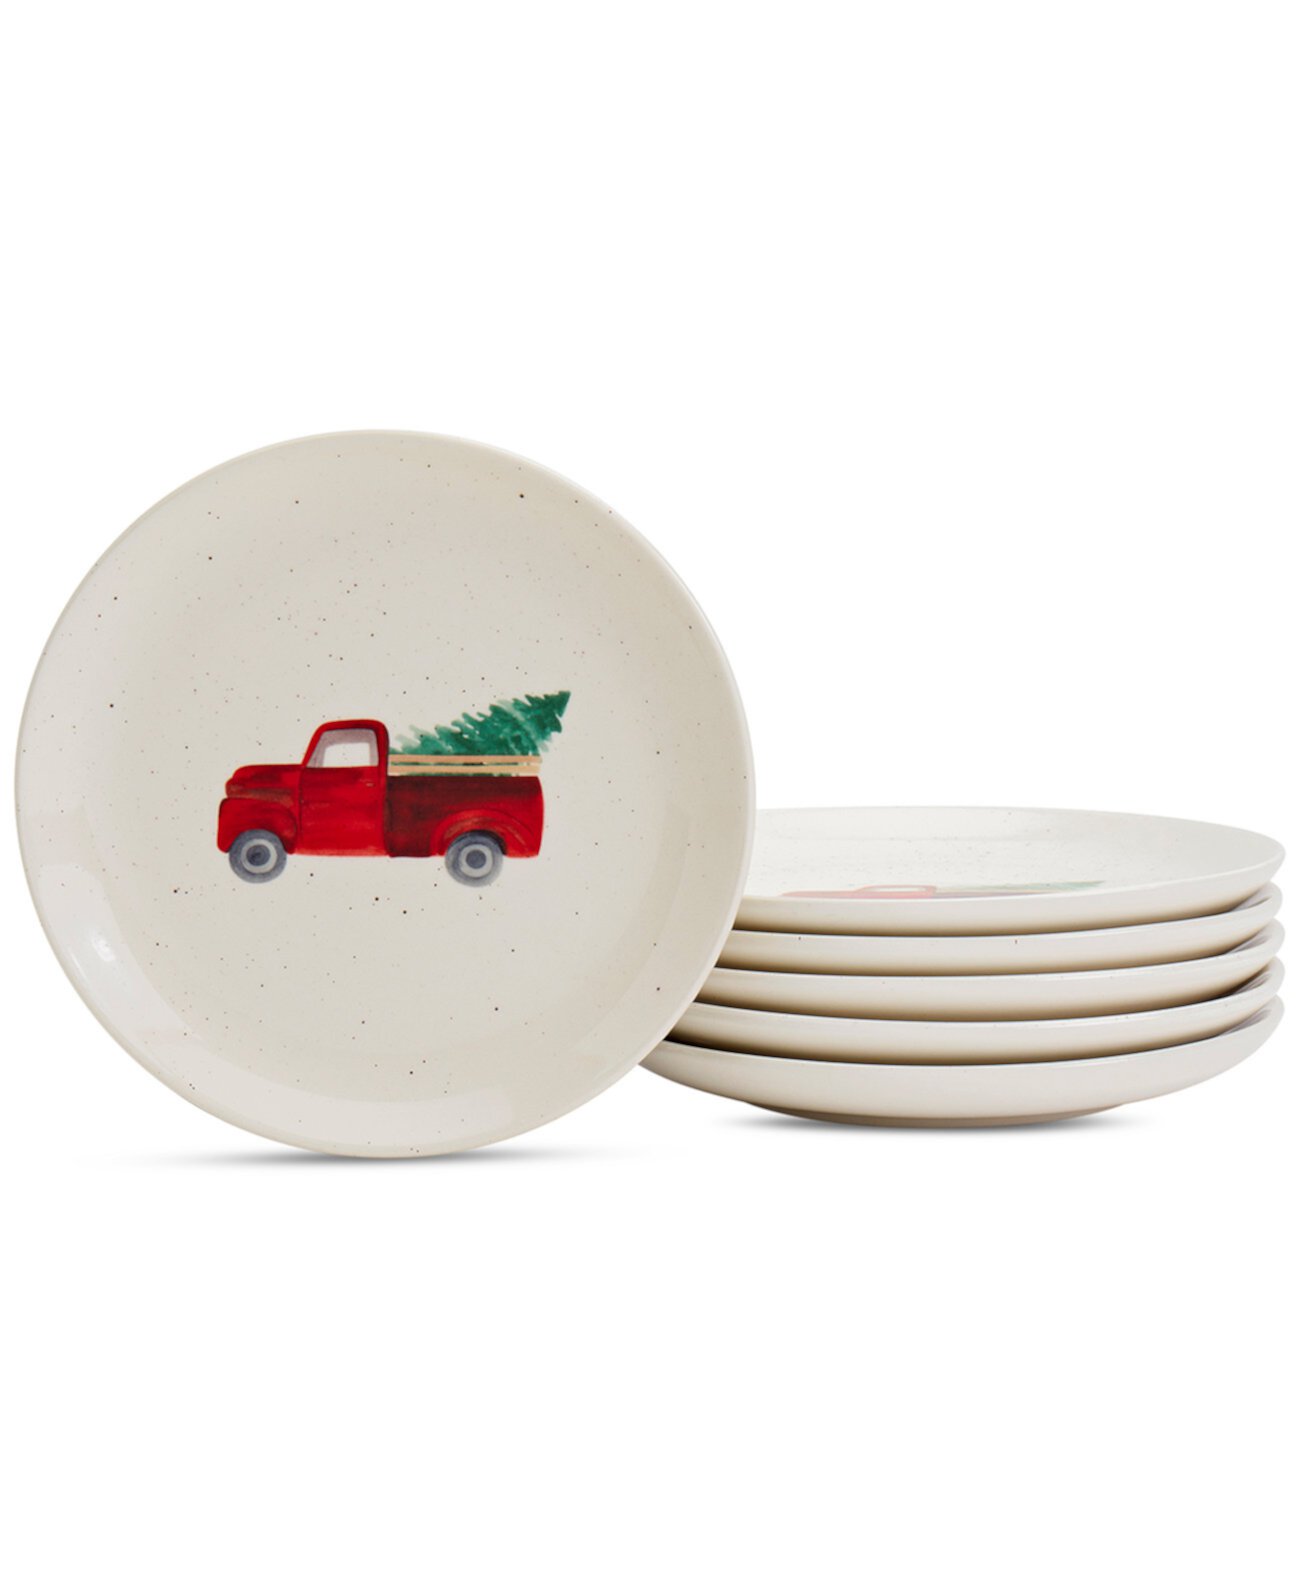 Глиняная посуда Small Town 8-дюймовые тарелки для салата, набор из 6 шт. Dolly Parton